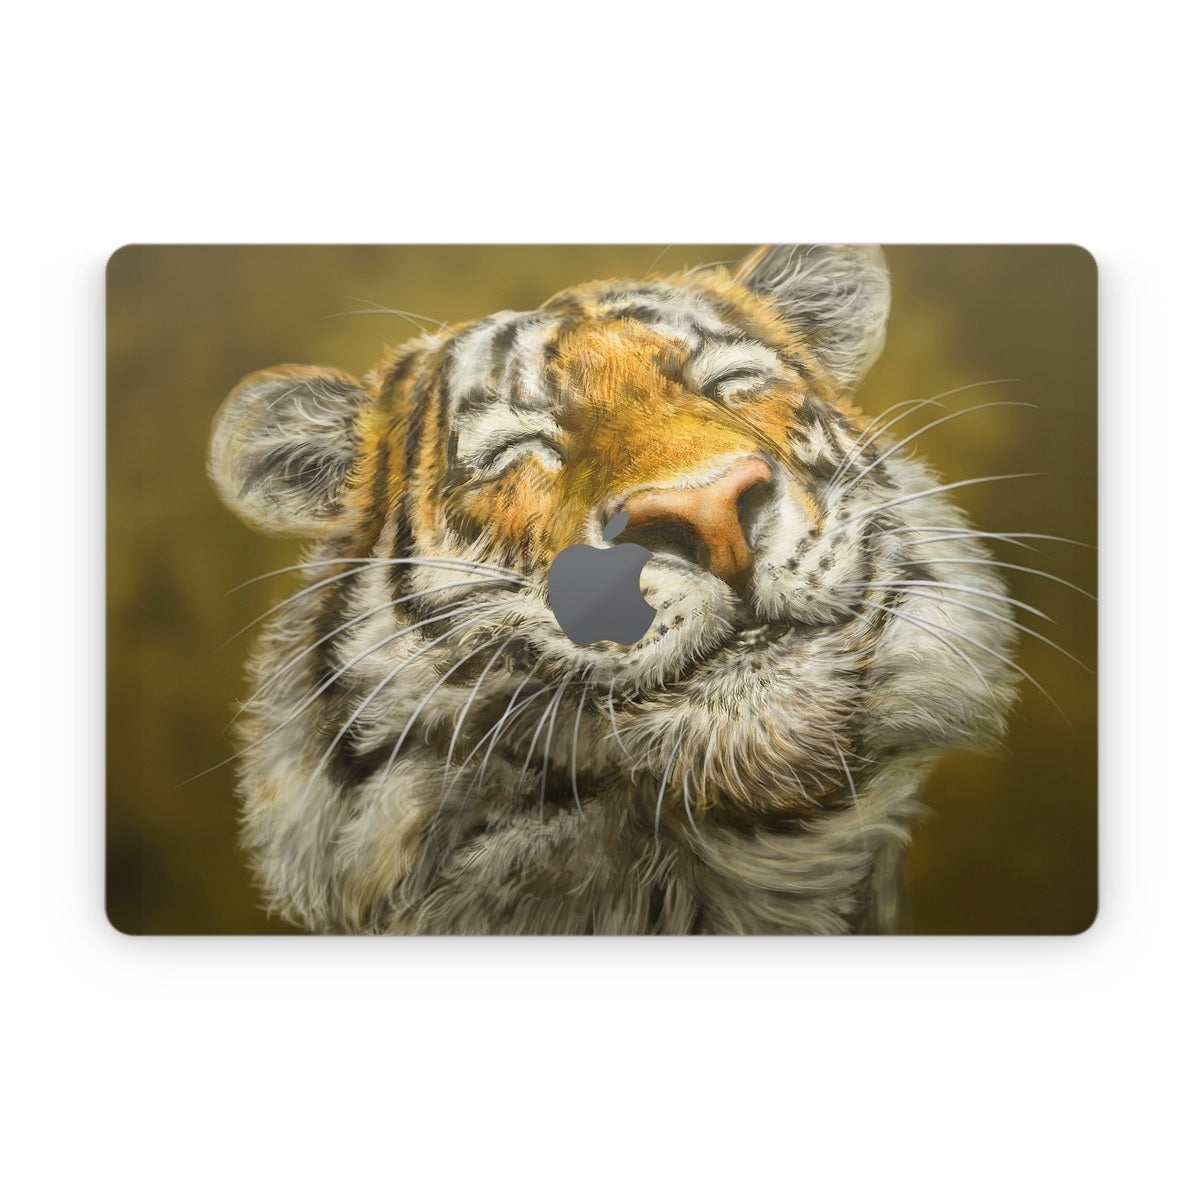 Smiling Tiger - Apple MacBook Skin